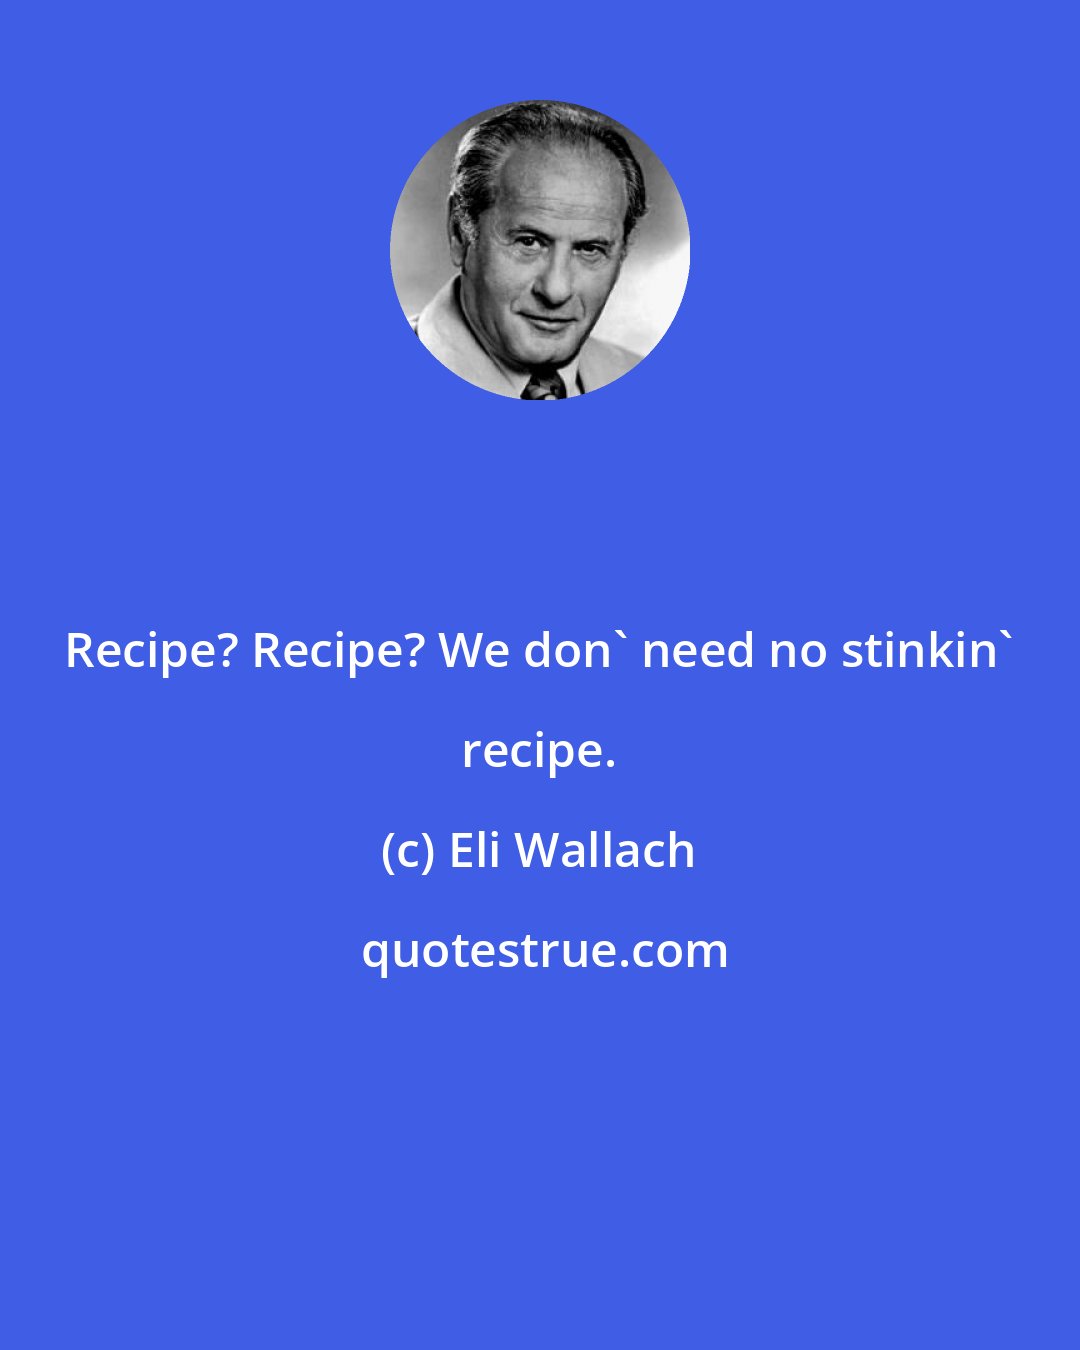 Eli Wallach: Recipe? Recipe? We don' need no stinkin' recipe.